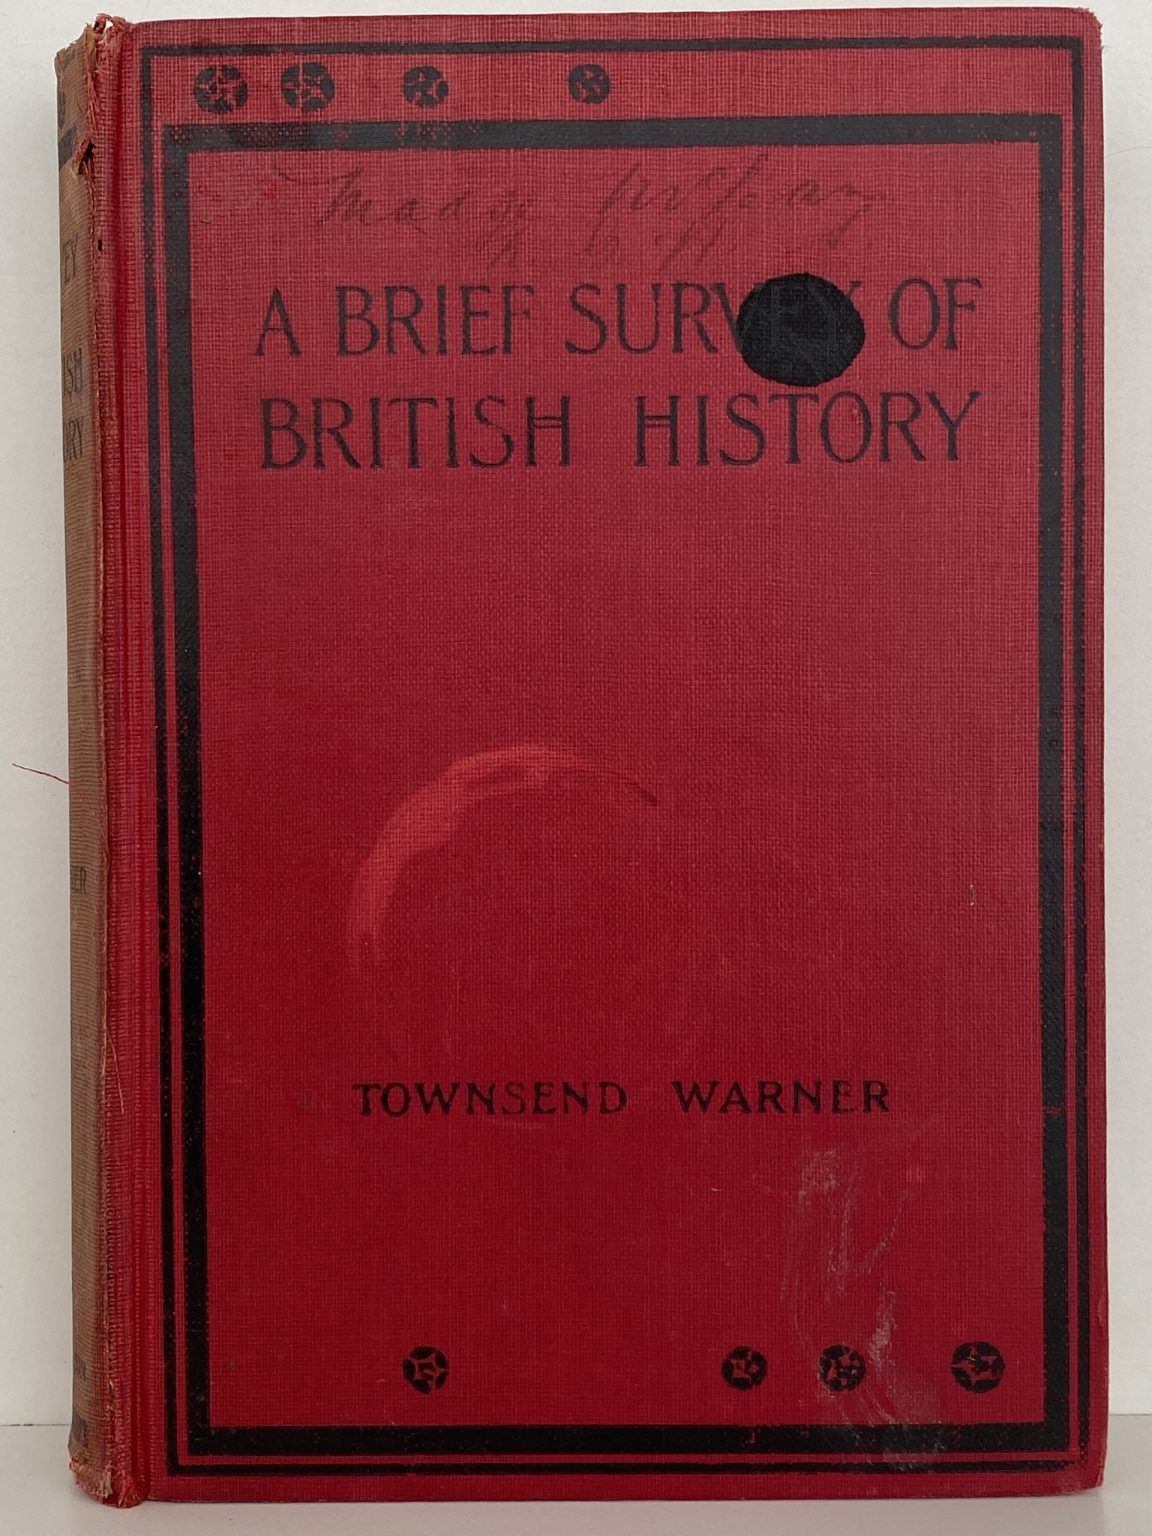 A BRIEF SURVEY OF BRITISH HISTORY